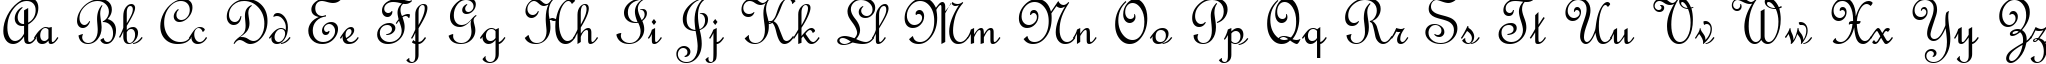 Пример написания английского алфавита шрифтом French Script MT